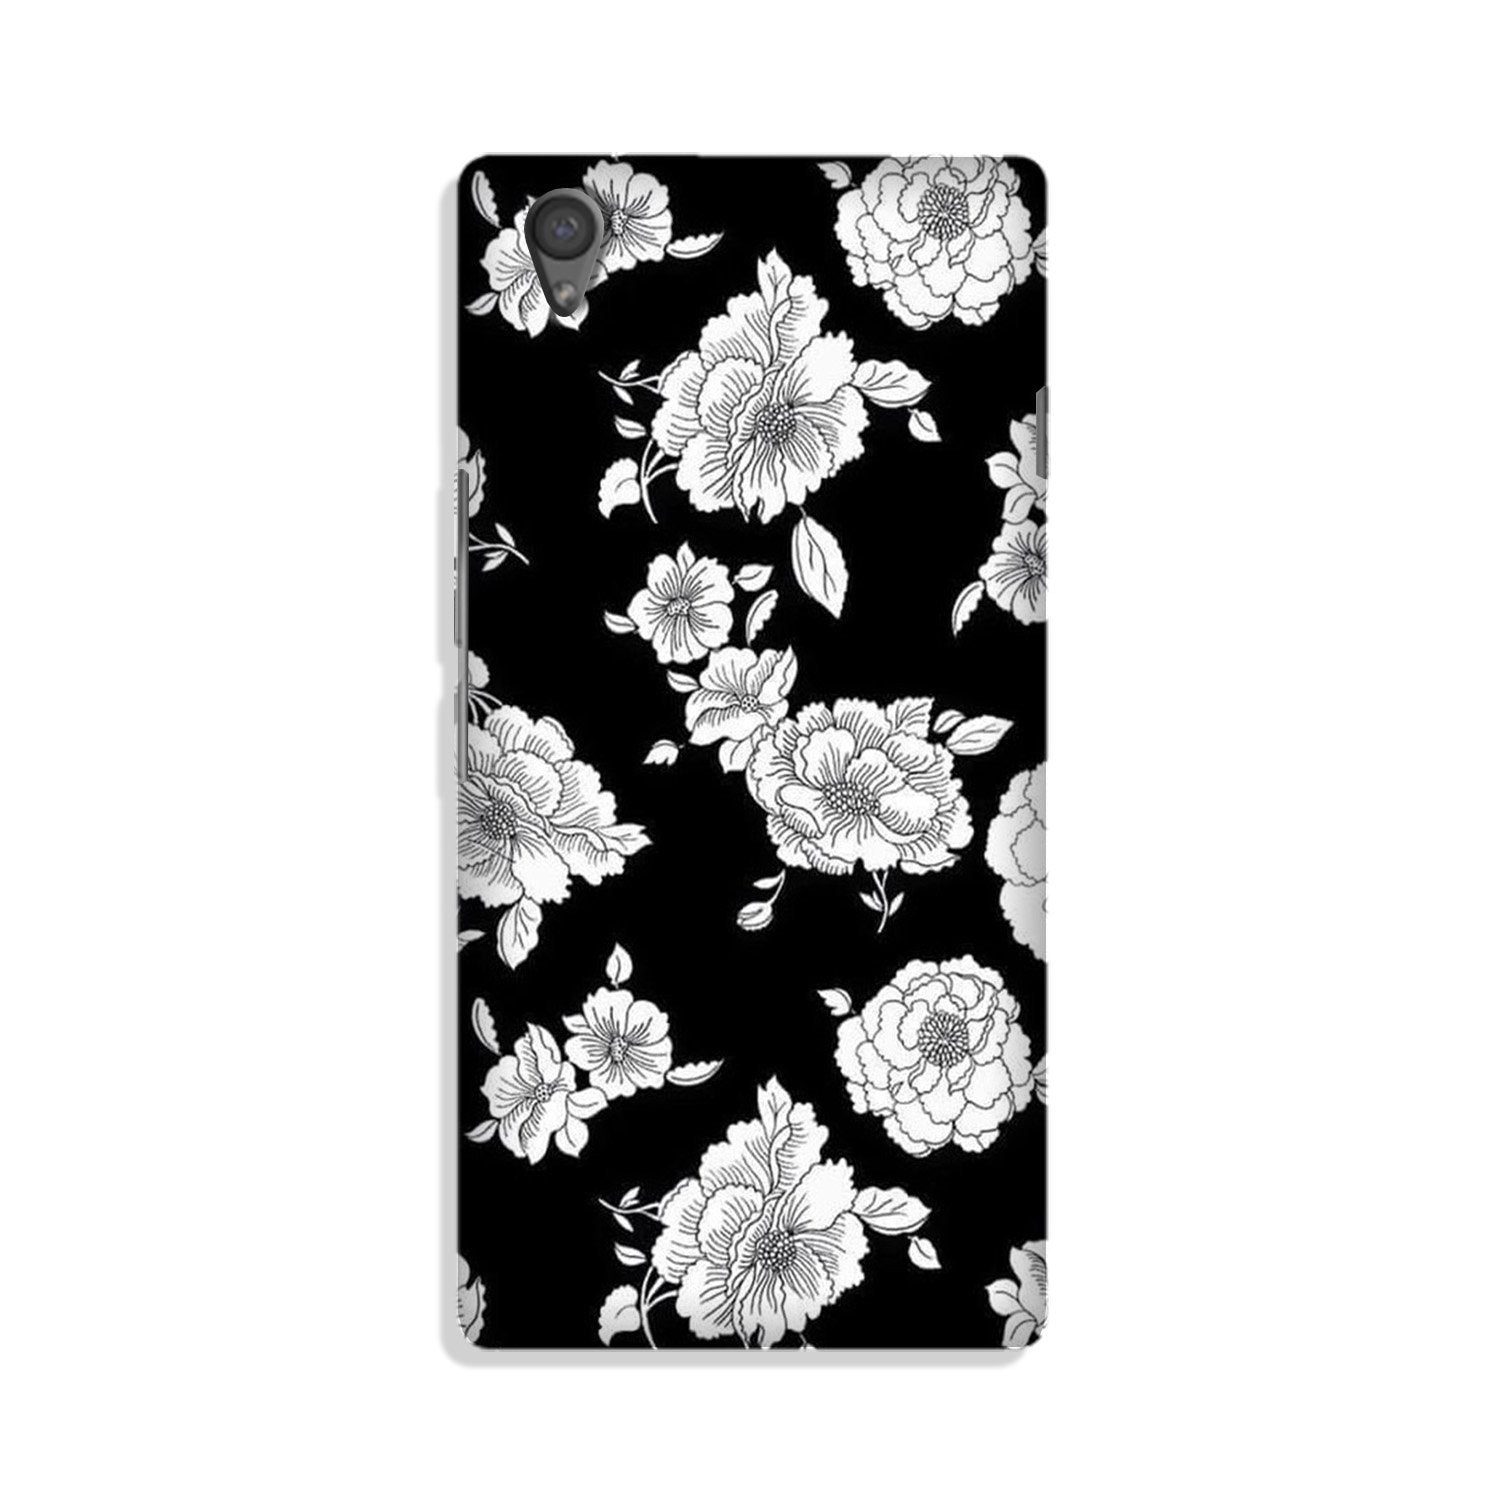 White flowers Black Background Case for Vivo Y51L